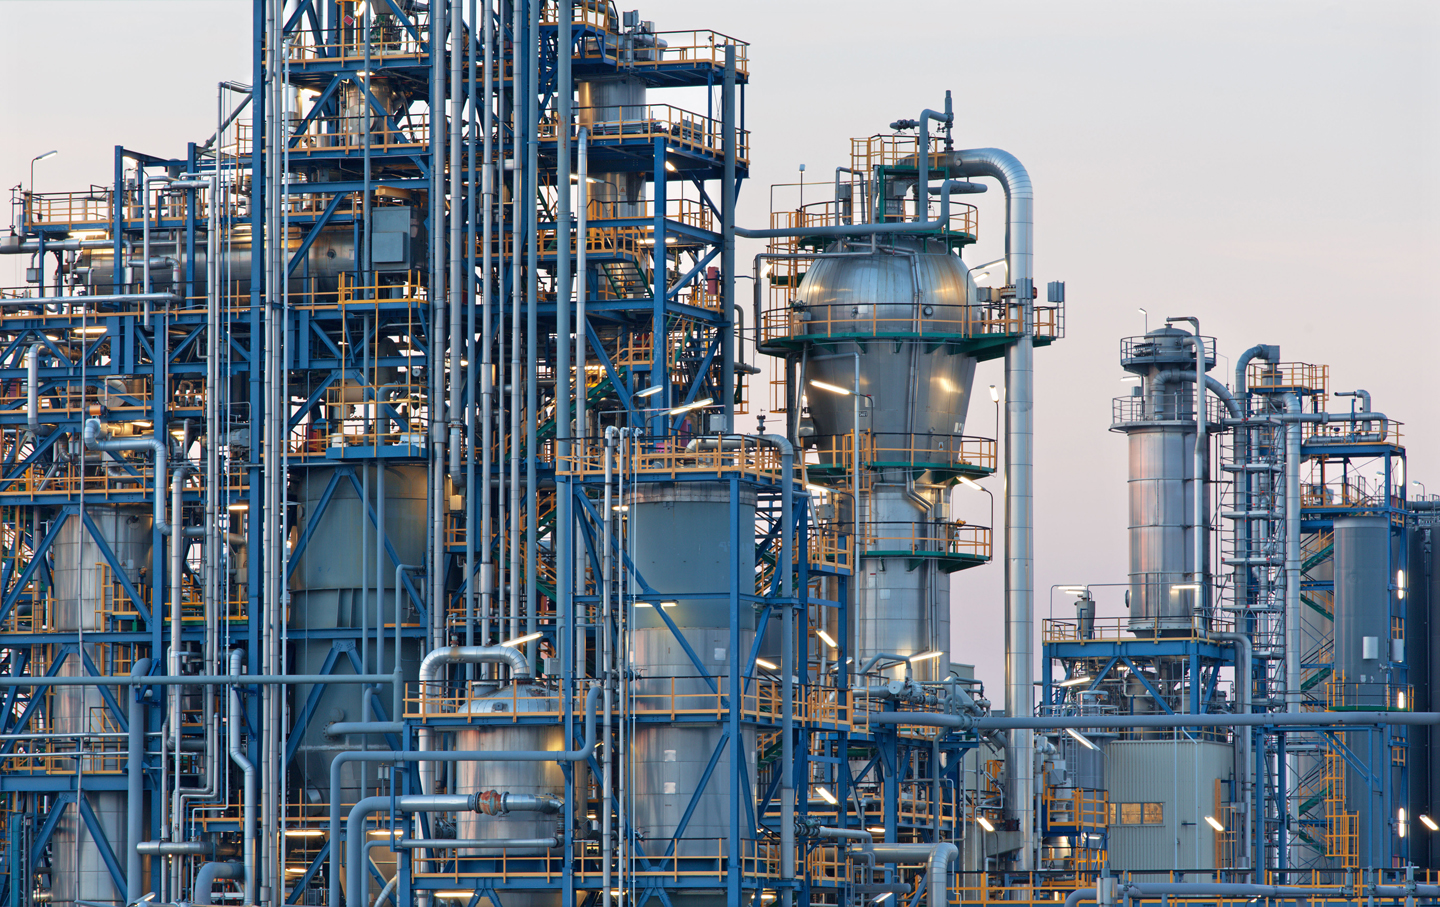 Rabin chemical processing plant equipment liquidation sales